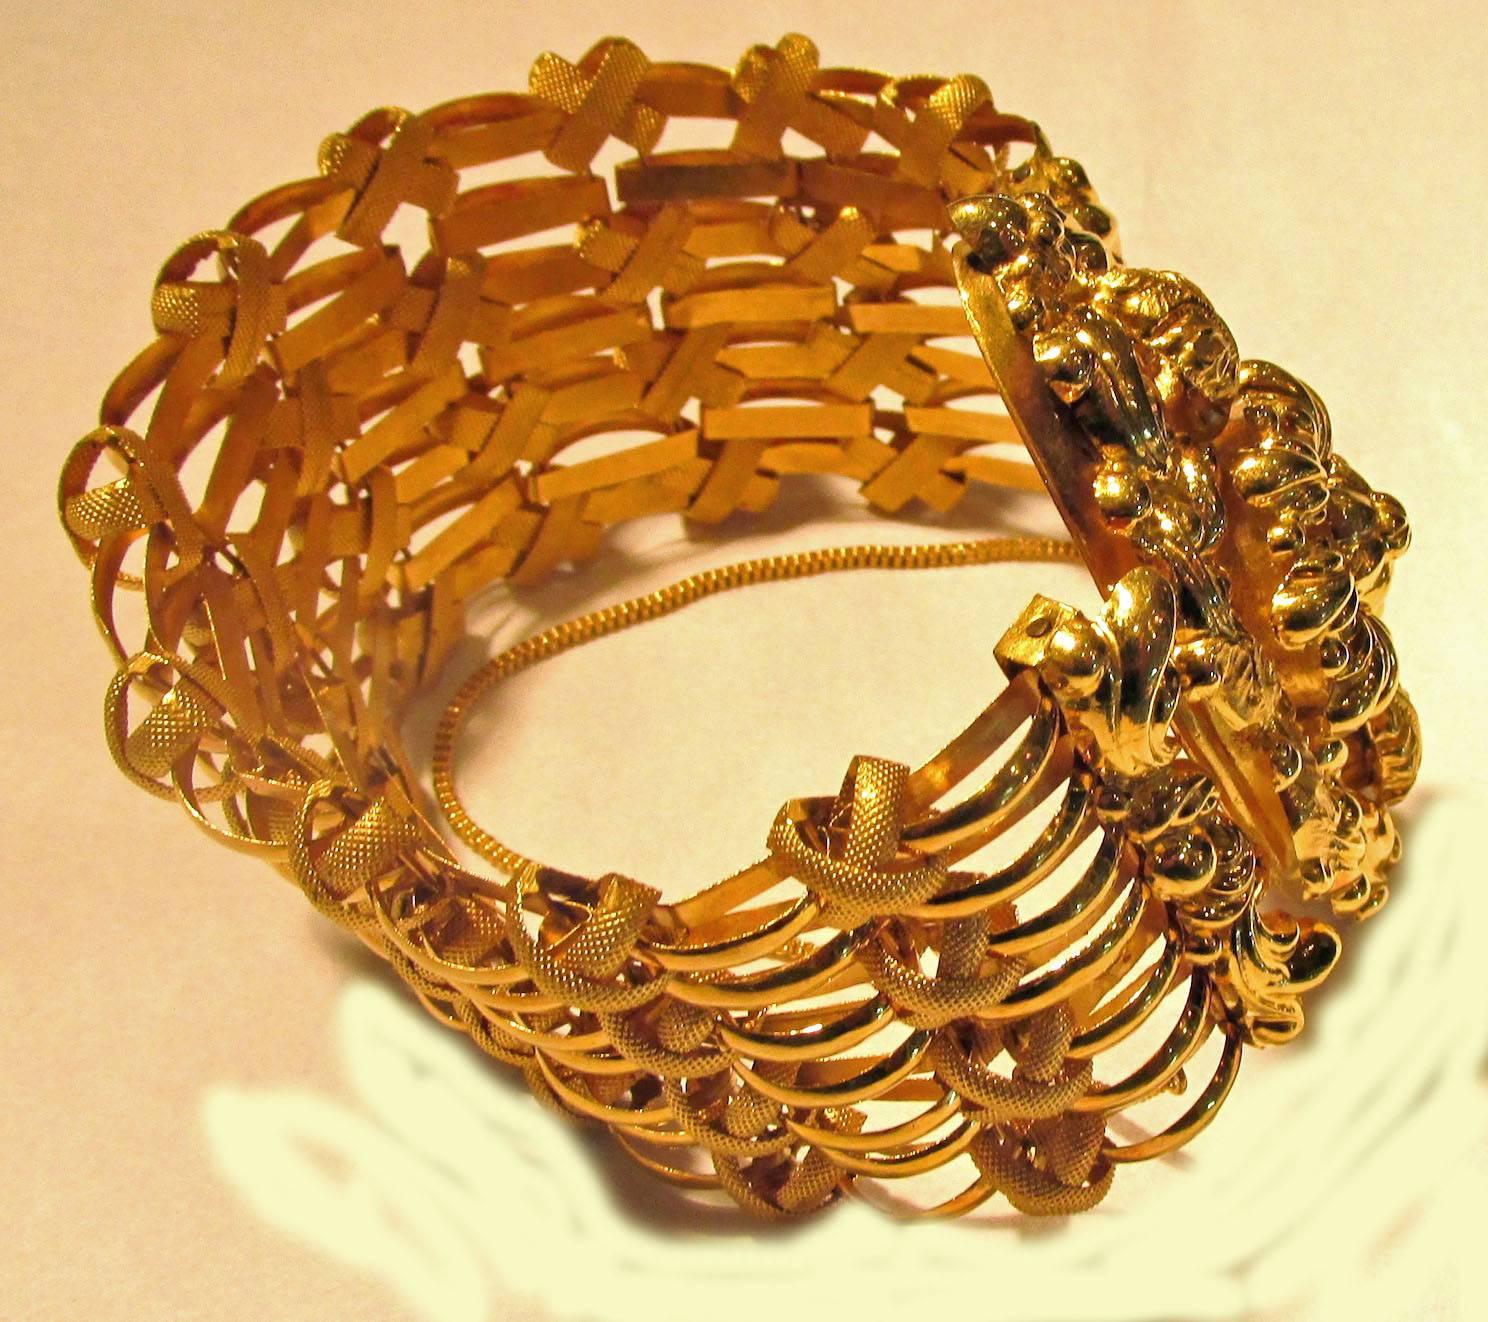 Antique French 18K Gold Cuff Bracelet, c1800bv For Sale 2